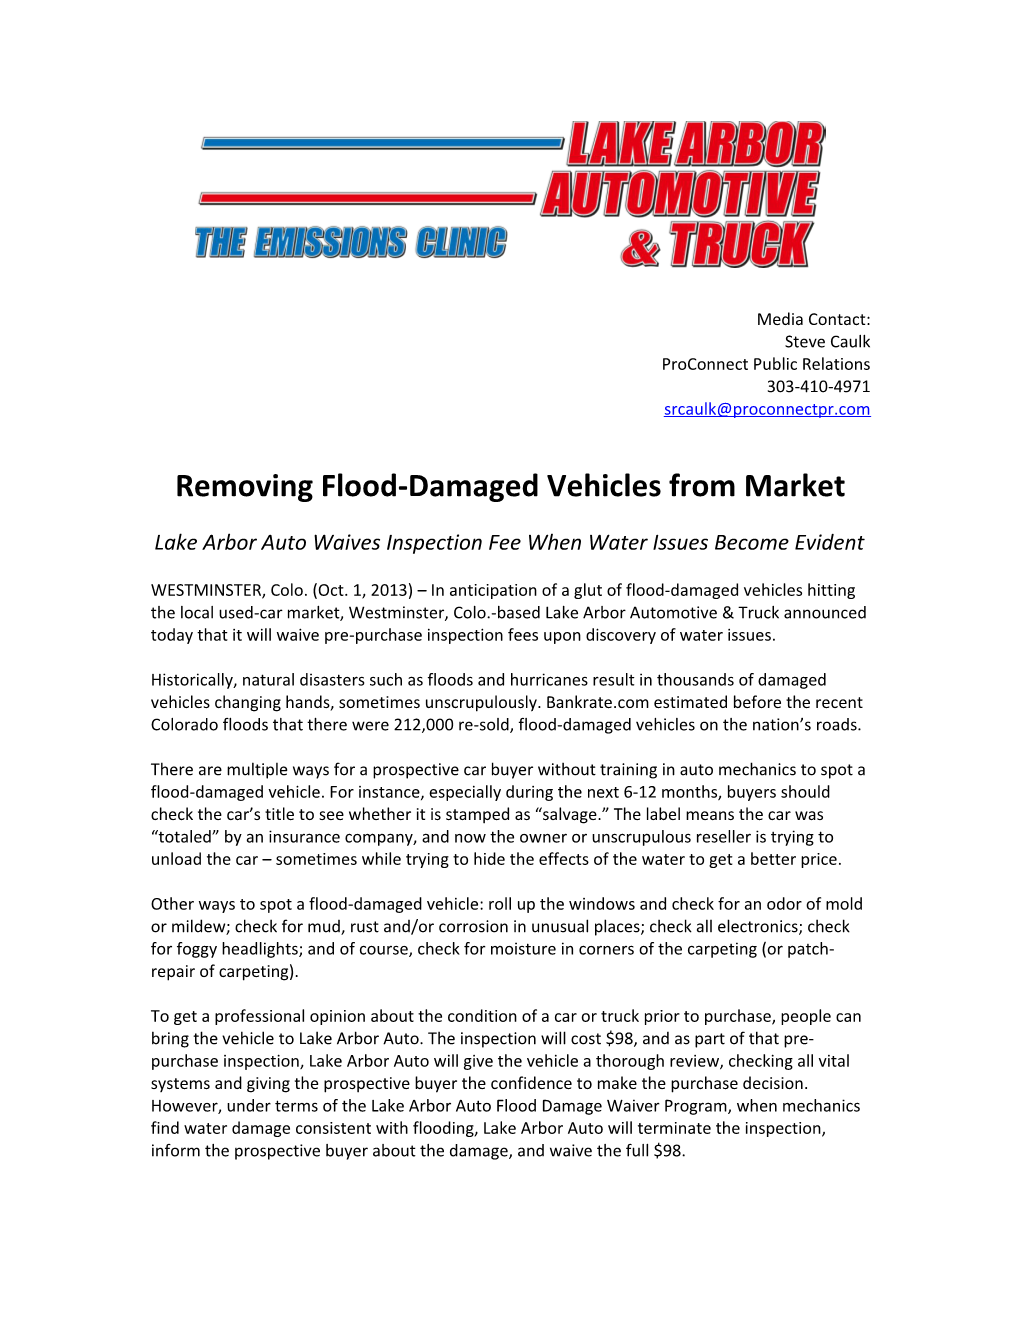 Removing Flood-Damaged Vehicles from Market